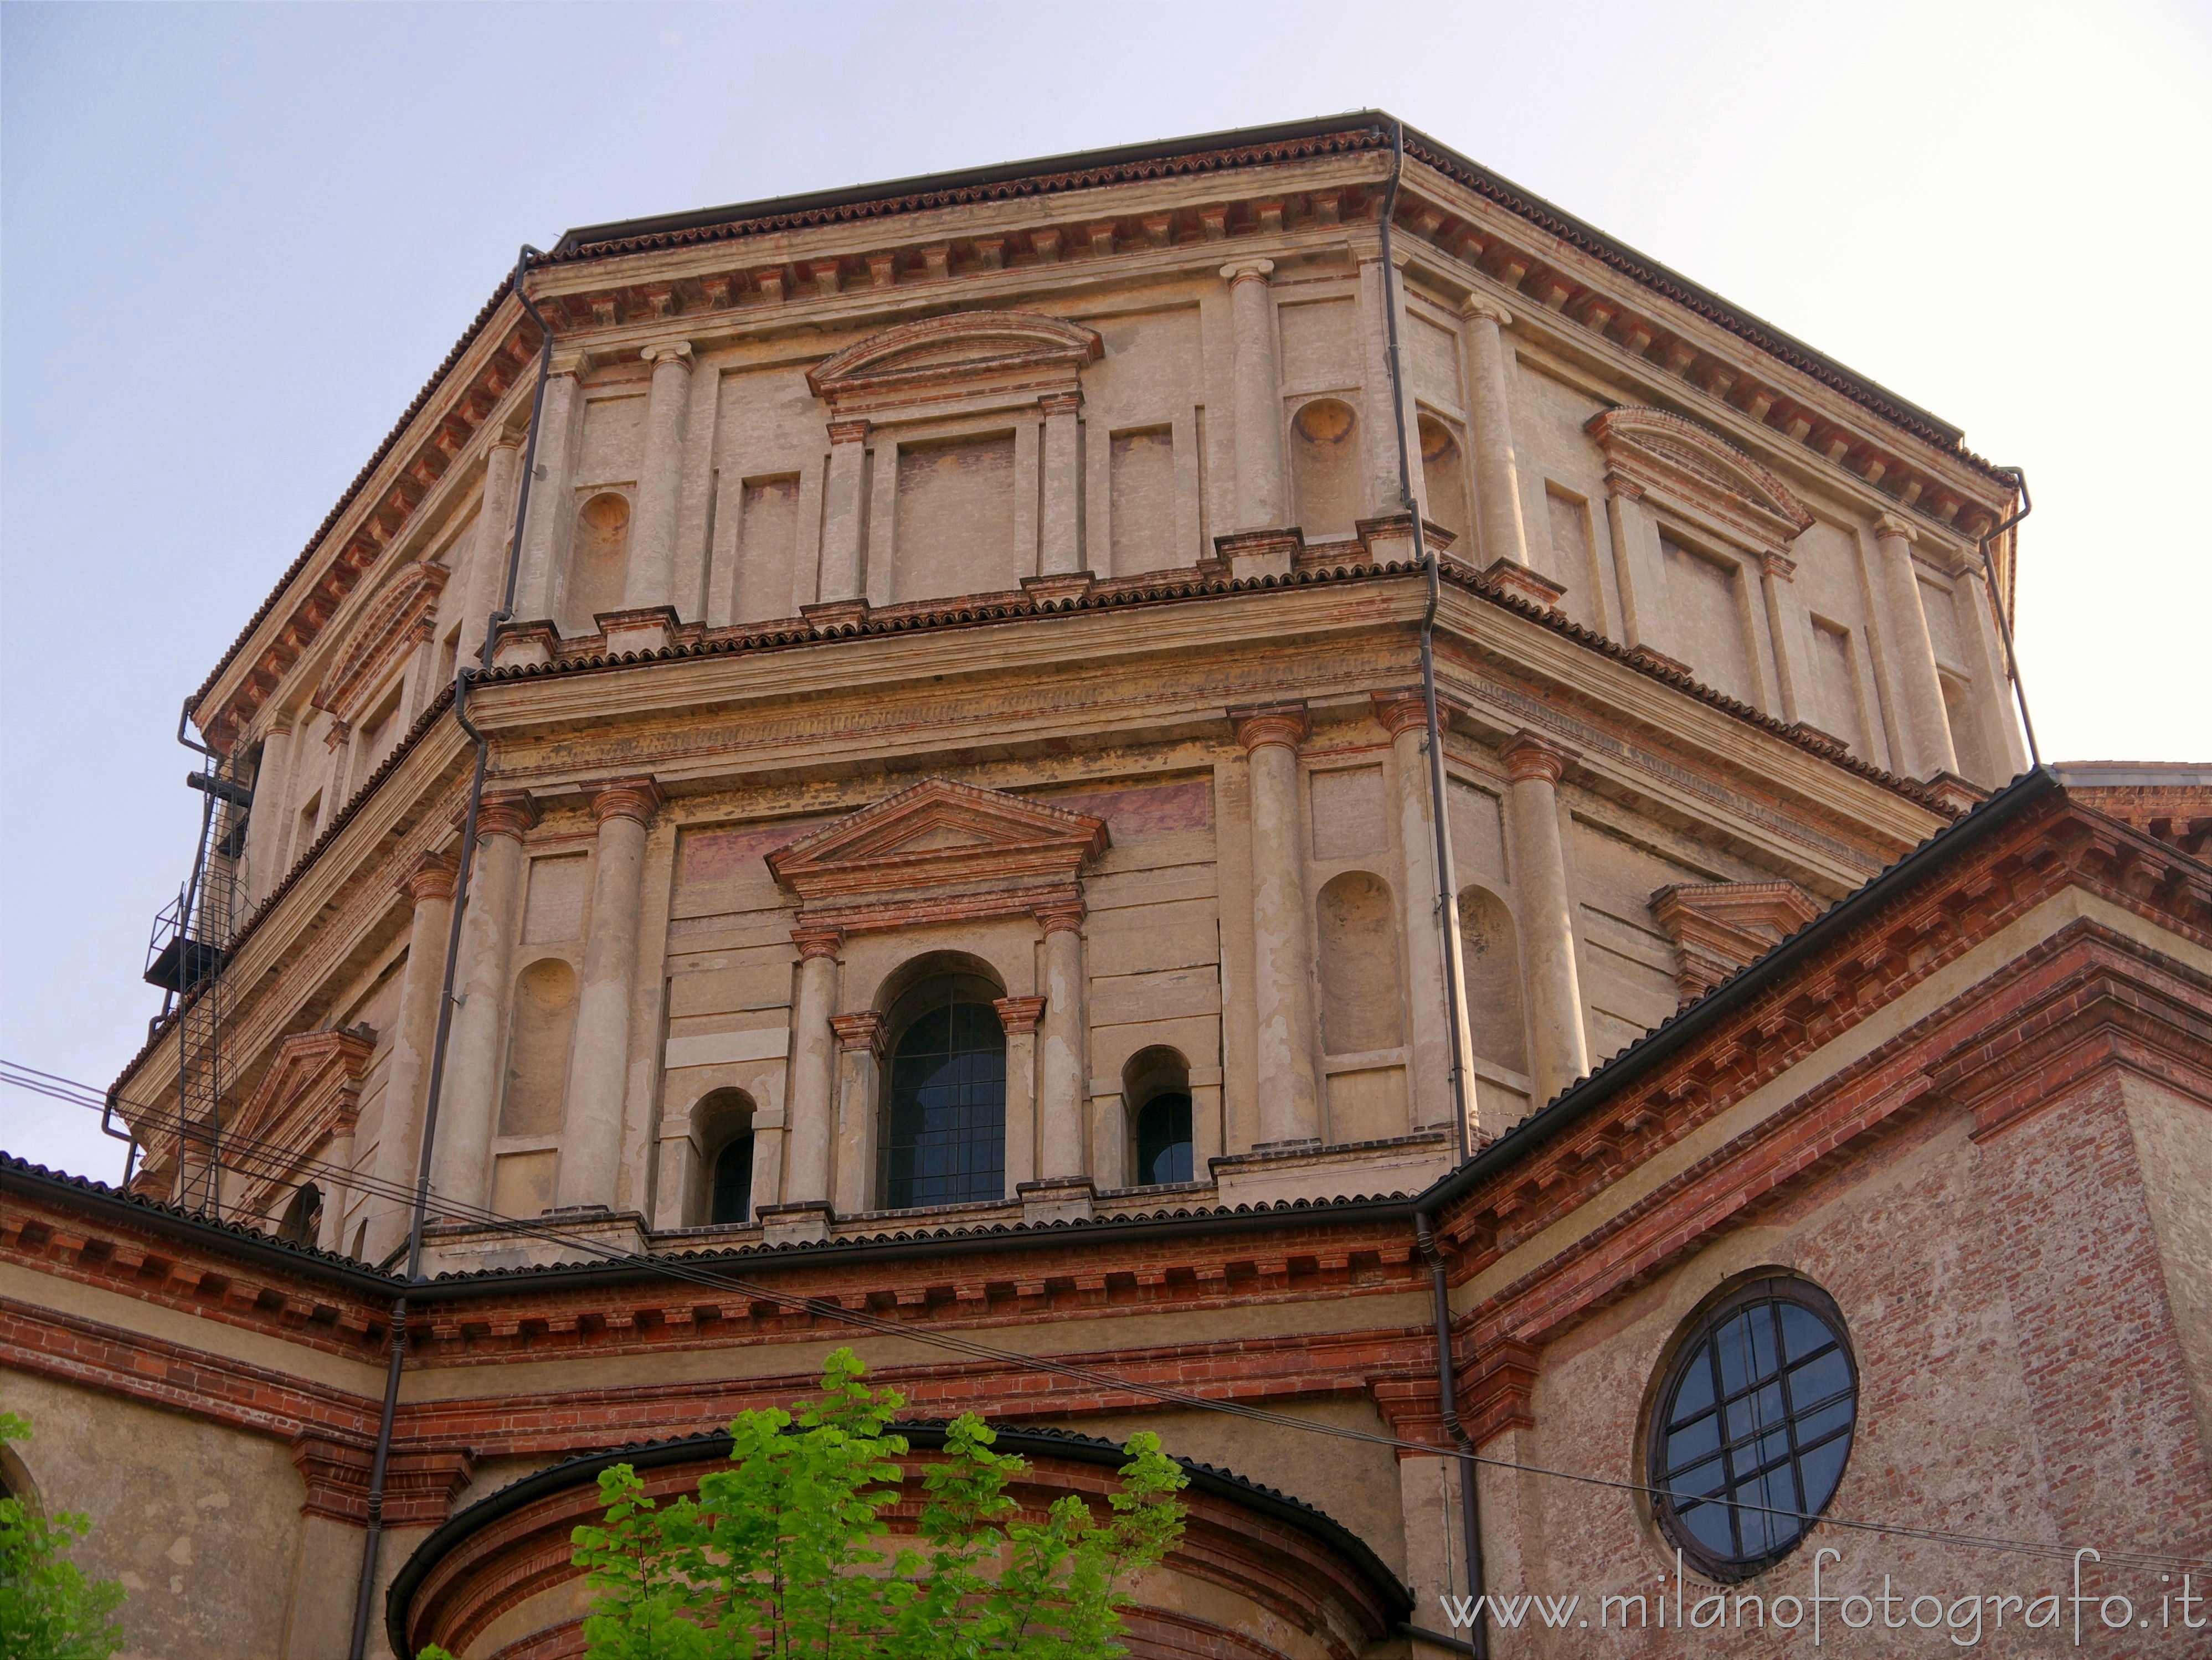 Milan (Italy): Tiburium of the Church of Santa Maria della Passione - Milan (Italy)